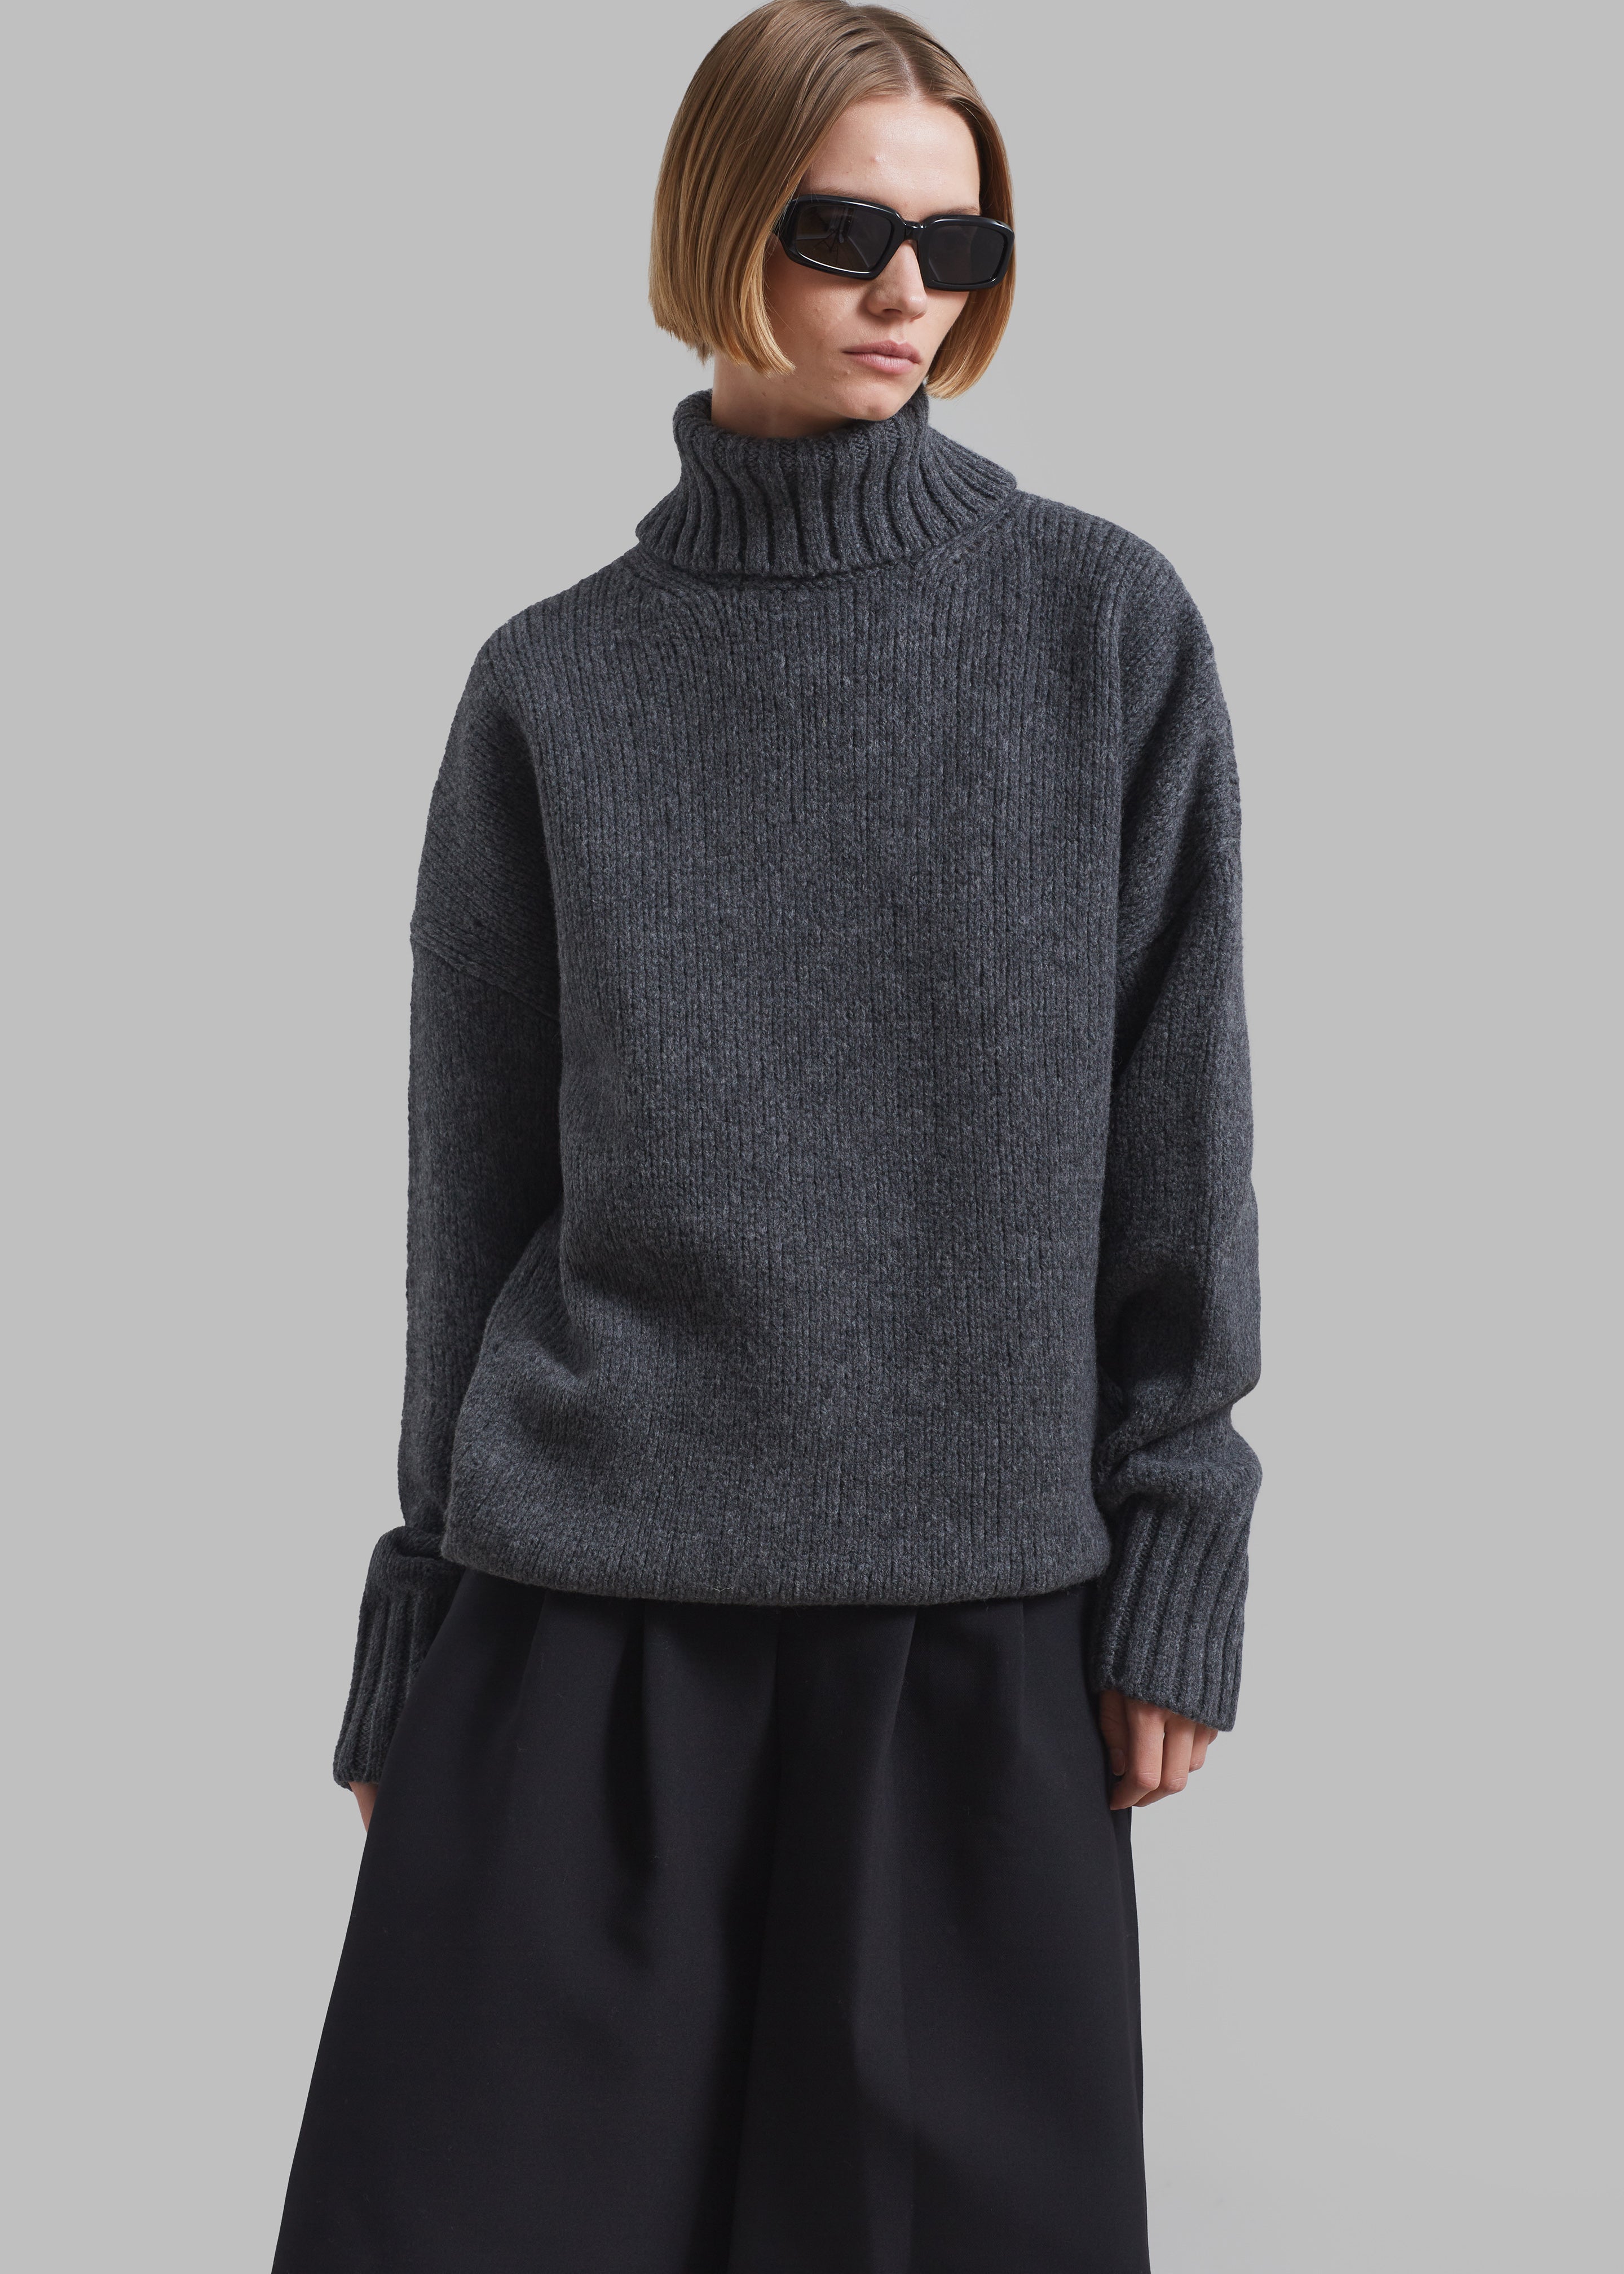 Sportmax Premier Knitted Sweater Dress - Dark Grey - 5